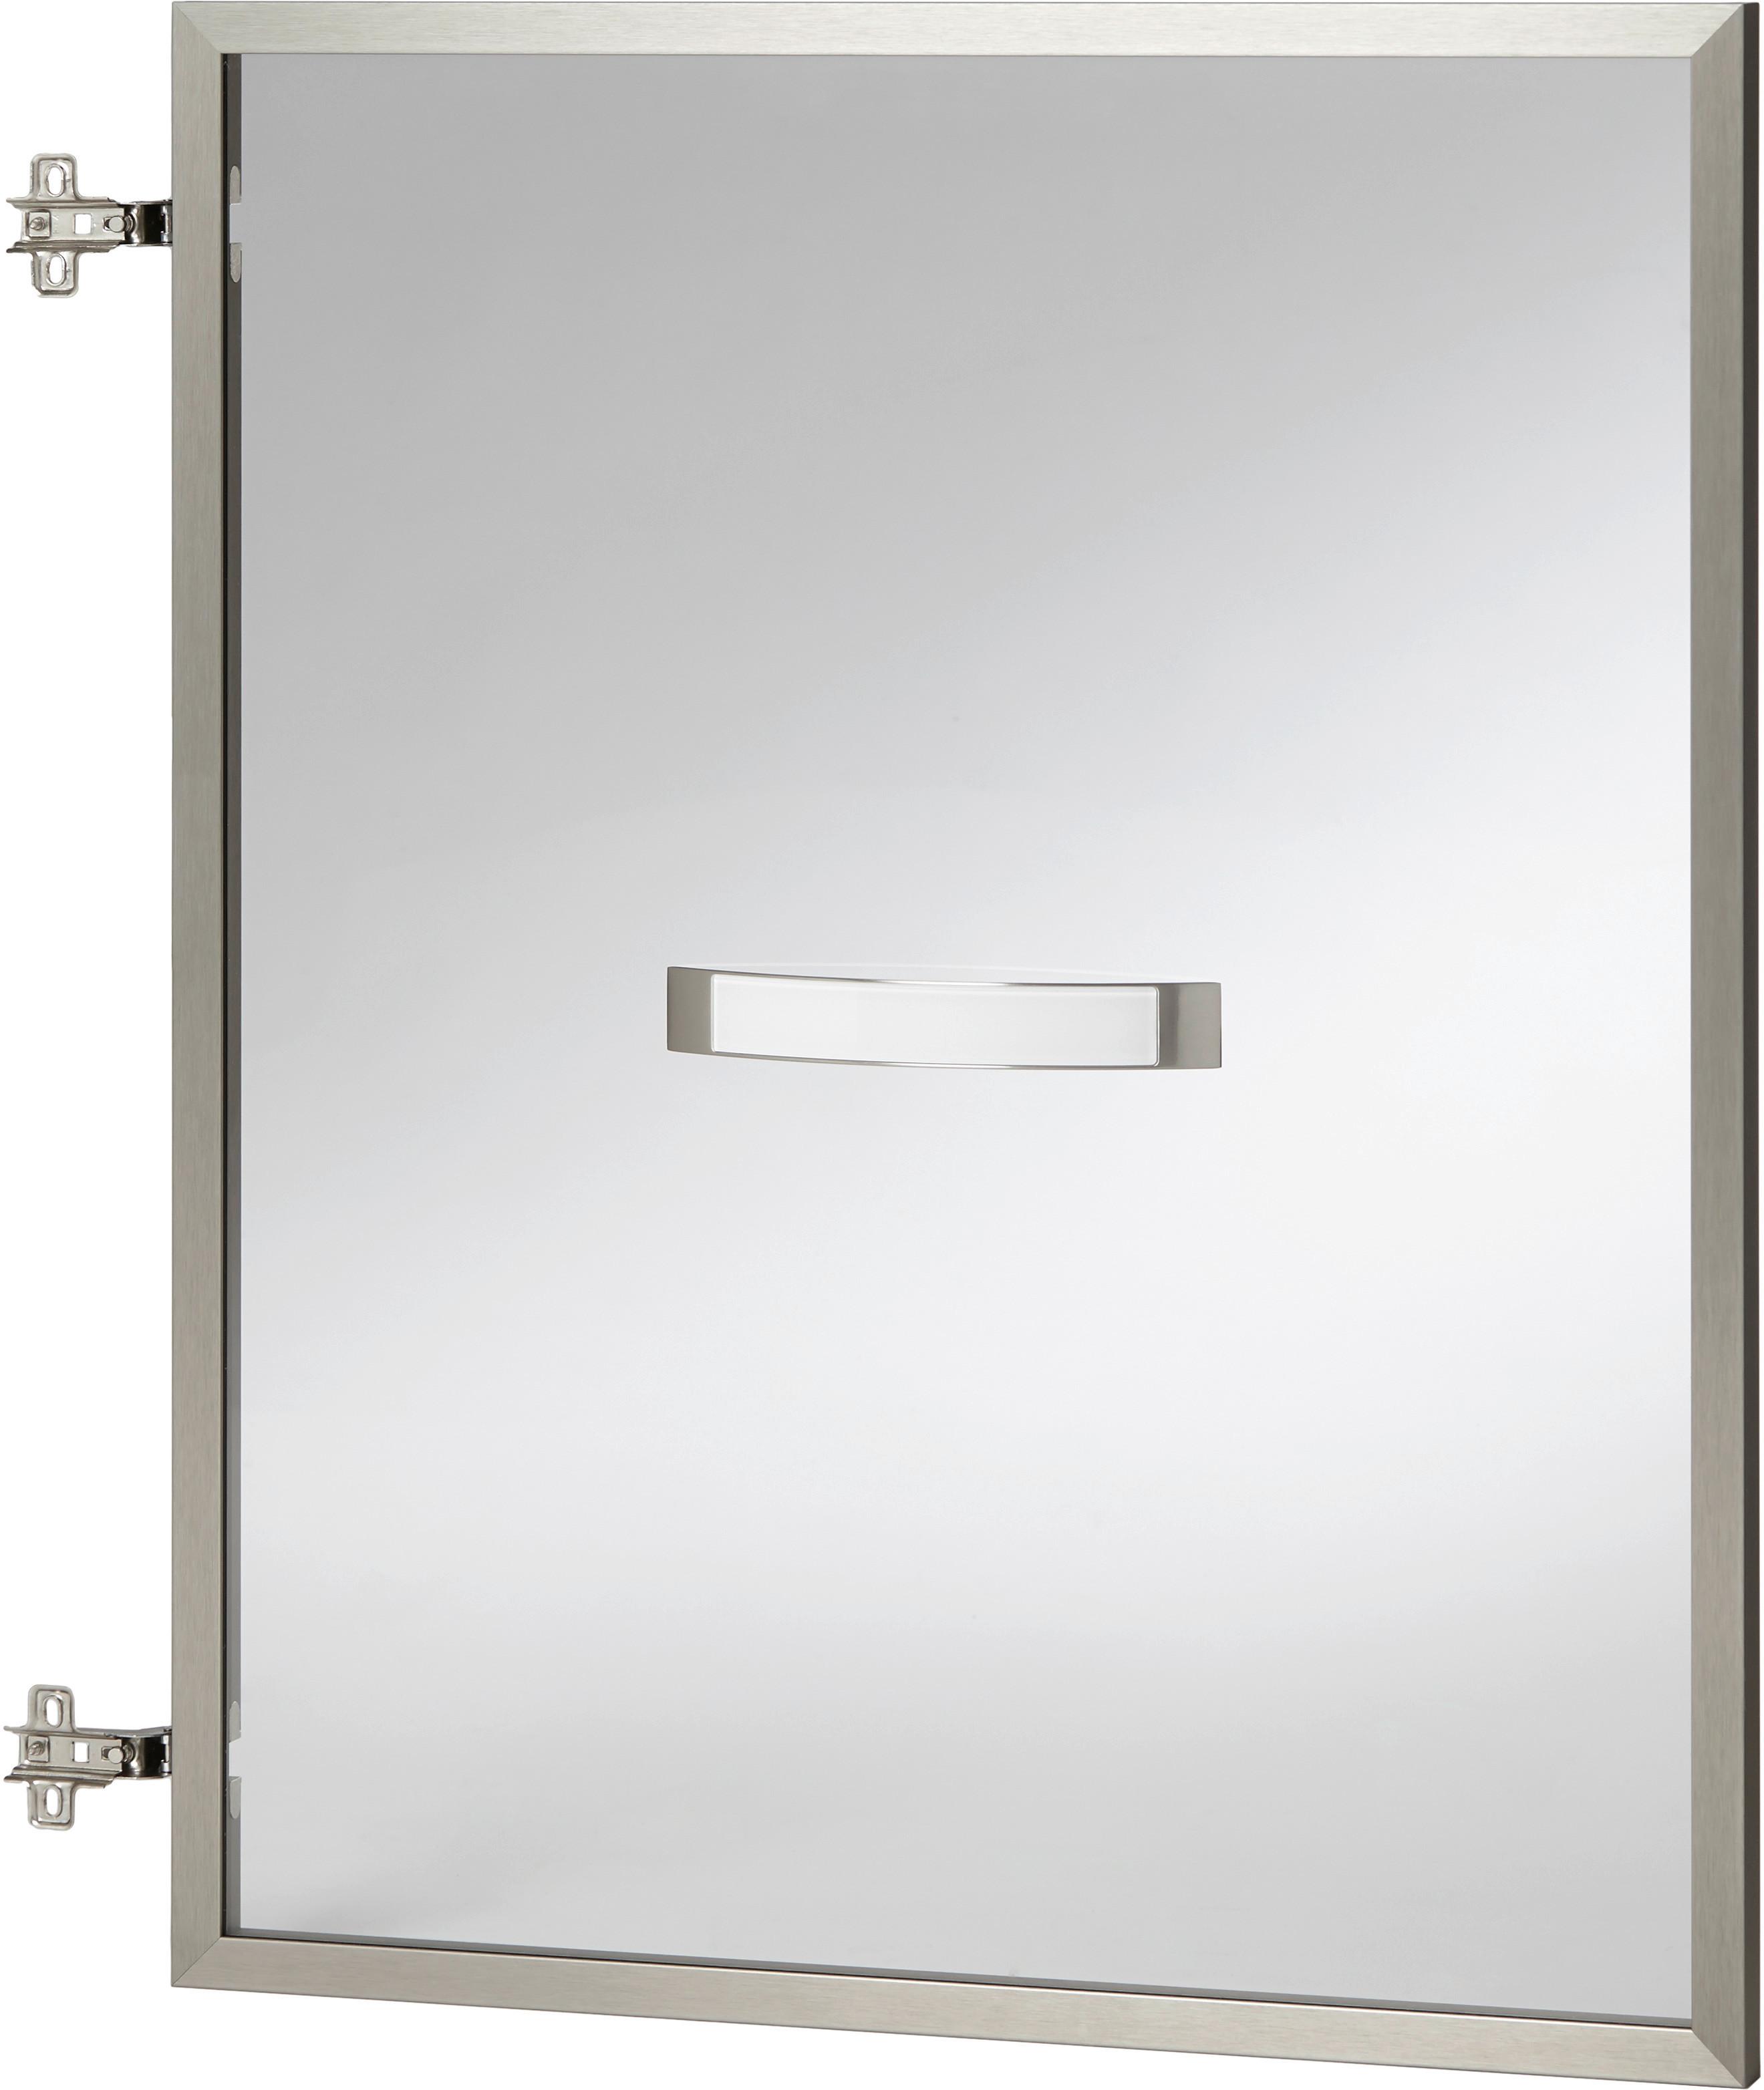 Tür in Alufarben - Champagner/Alufarben, MODERN, Glas/Metall (56.6/70.1/2.1cm) - Premium Living